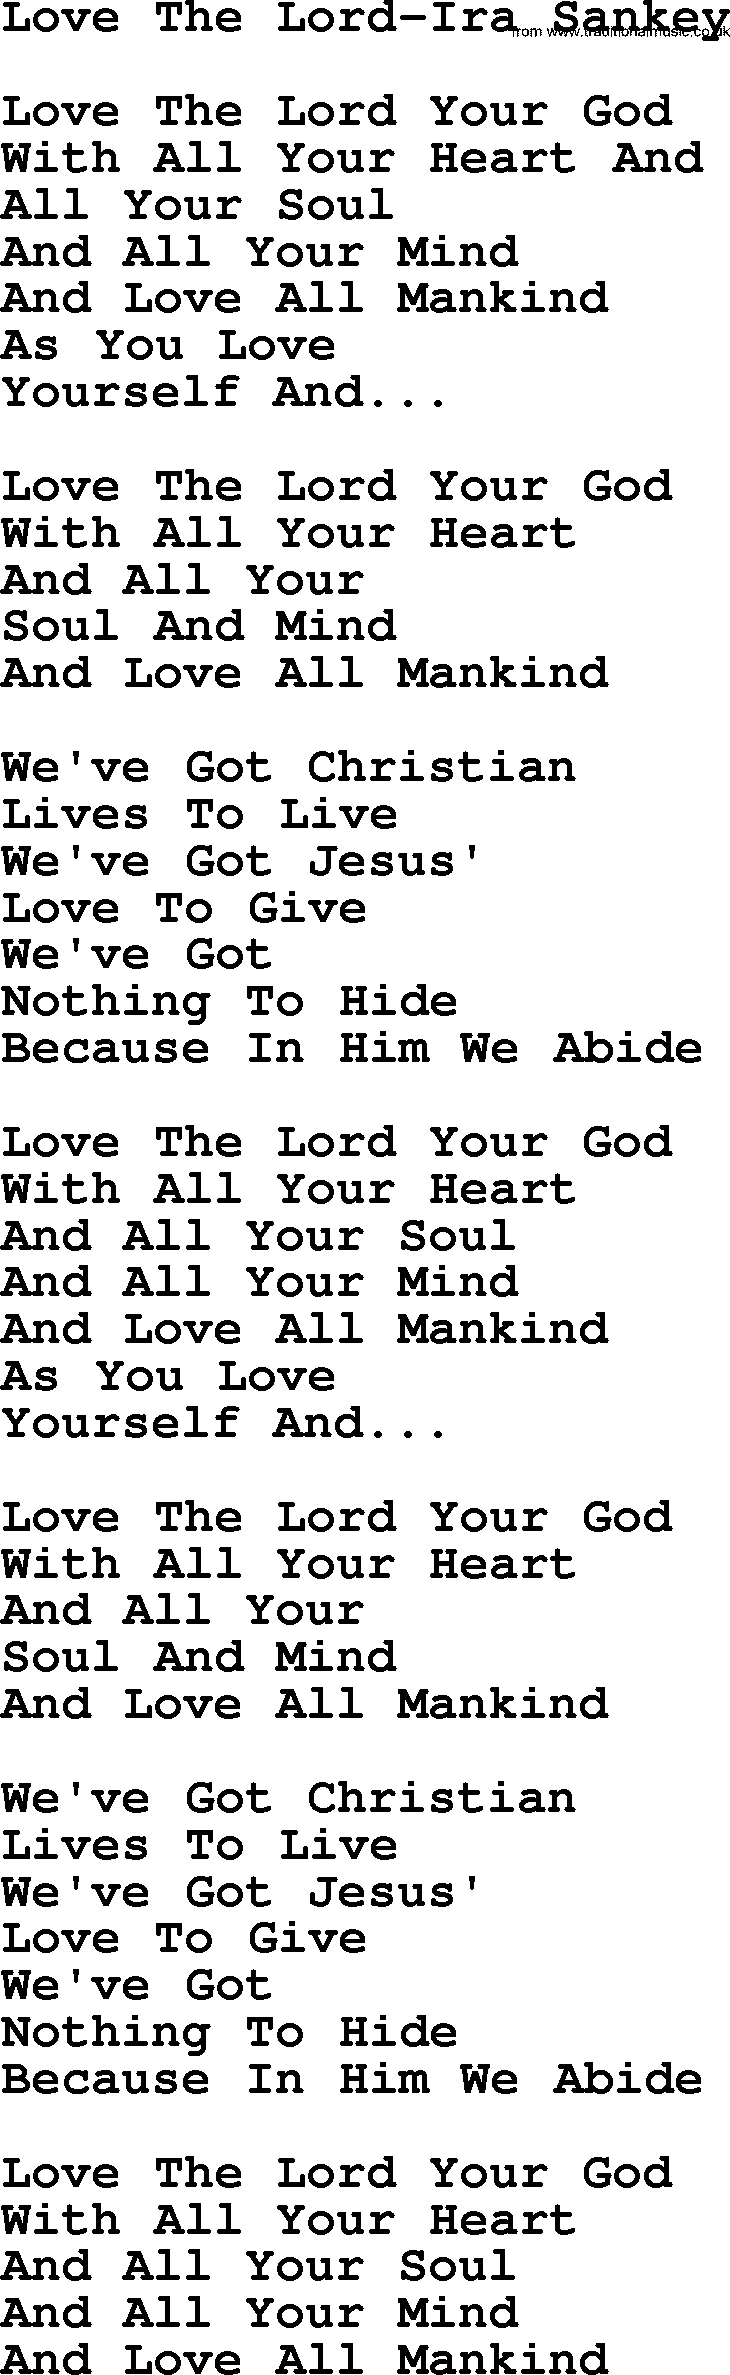 Ira Sankey hymn: Love The Lord-Ira Sankey, lyrics